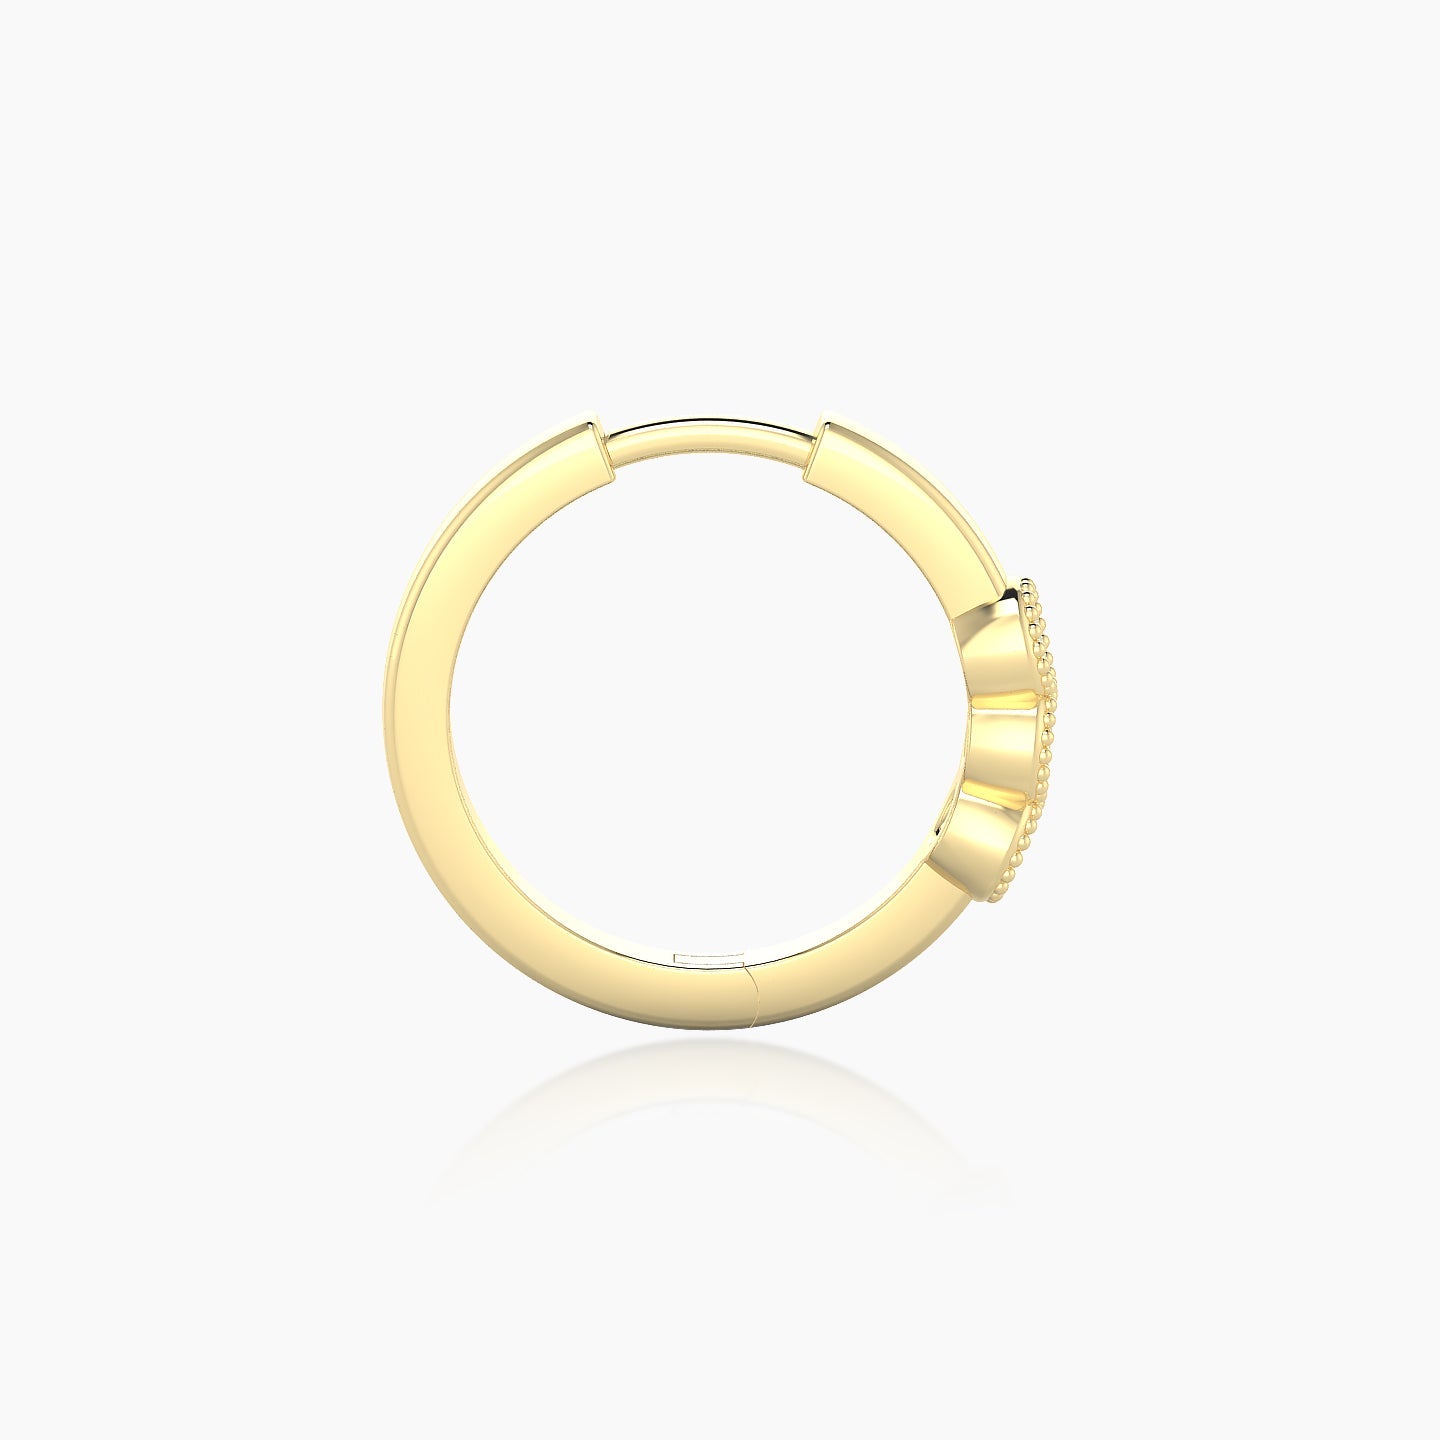 Irene | 18k Yellow Gold 9.5 mm Trilogy Diamond Nose Ring Piercing